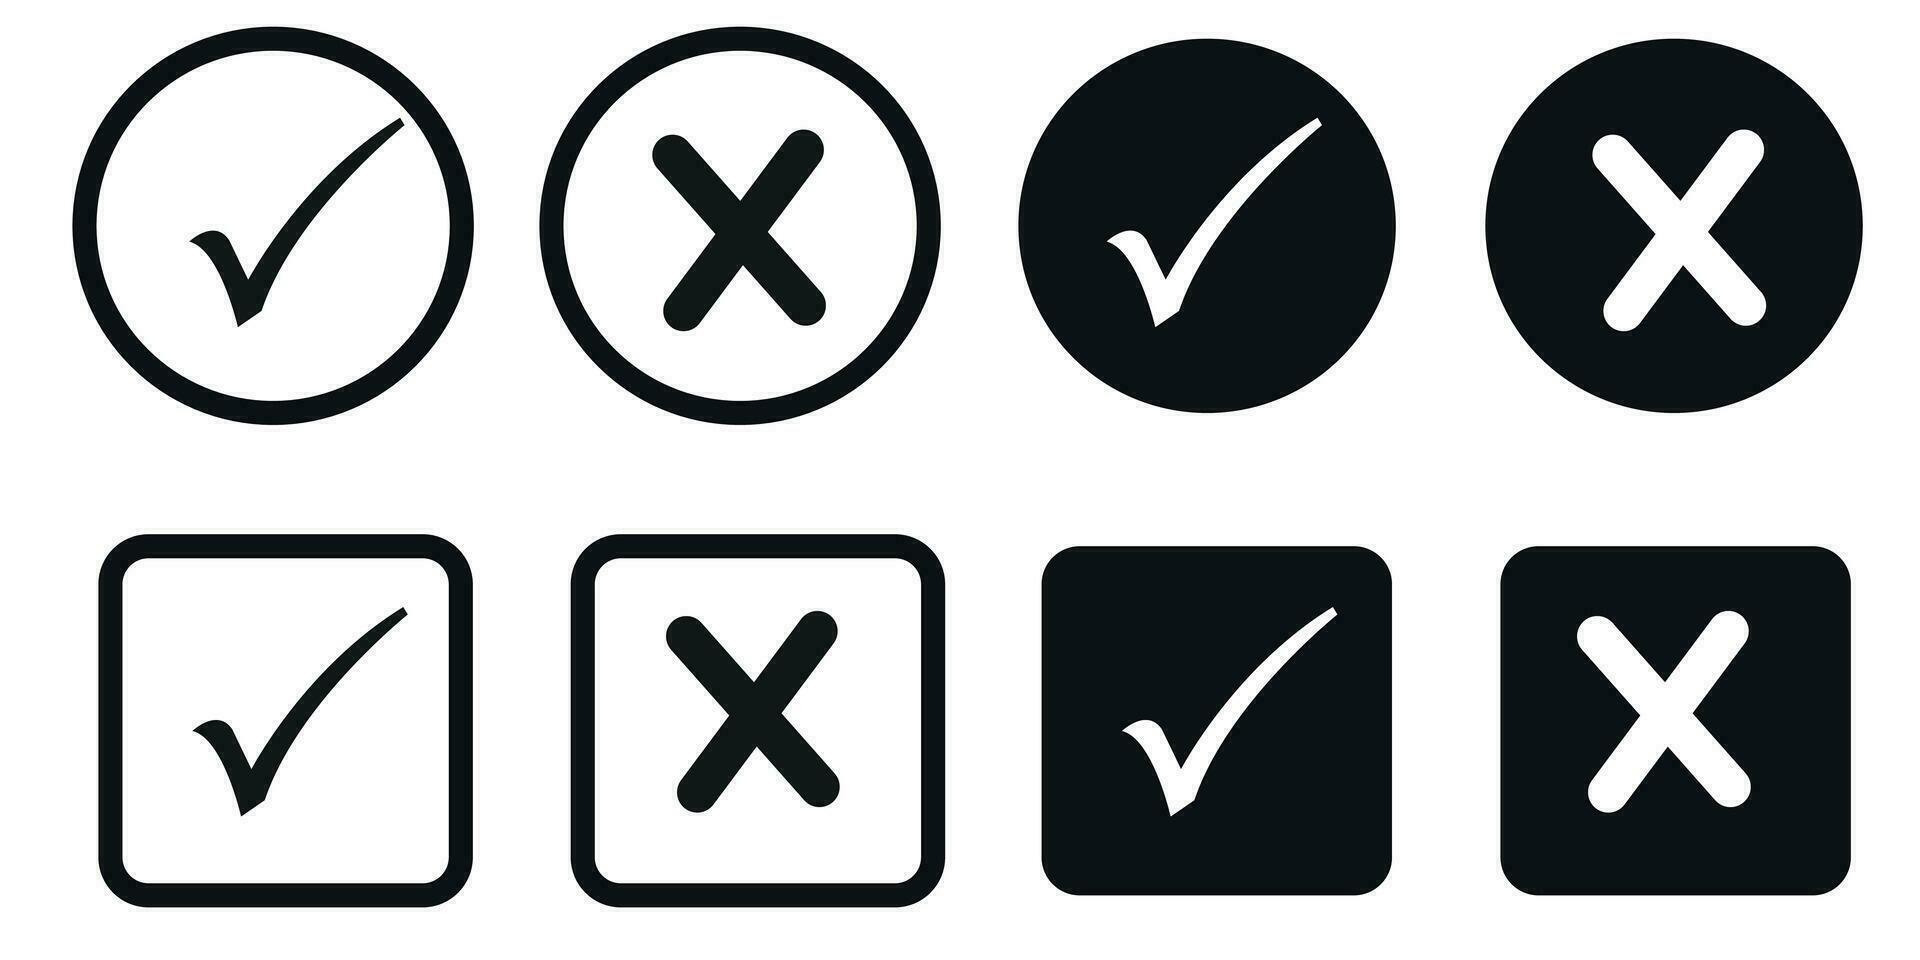 Checkmark cross icon Checkmark icon set. Checkmark right symbol tick sign. Vector illustration for ui, infographic, website, app, web use